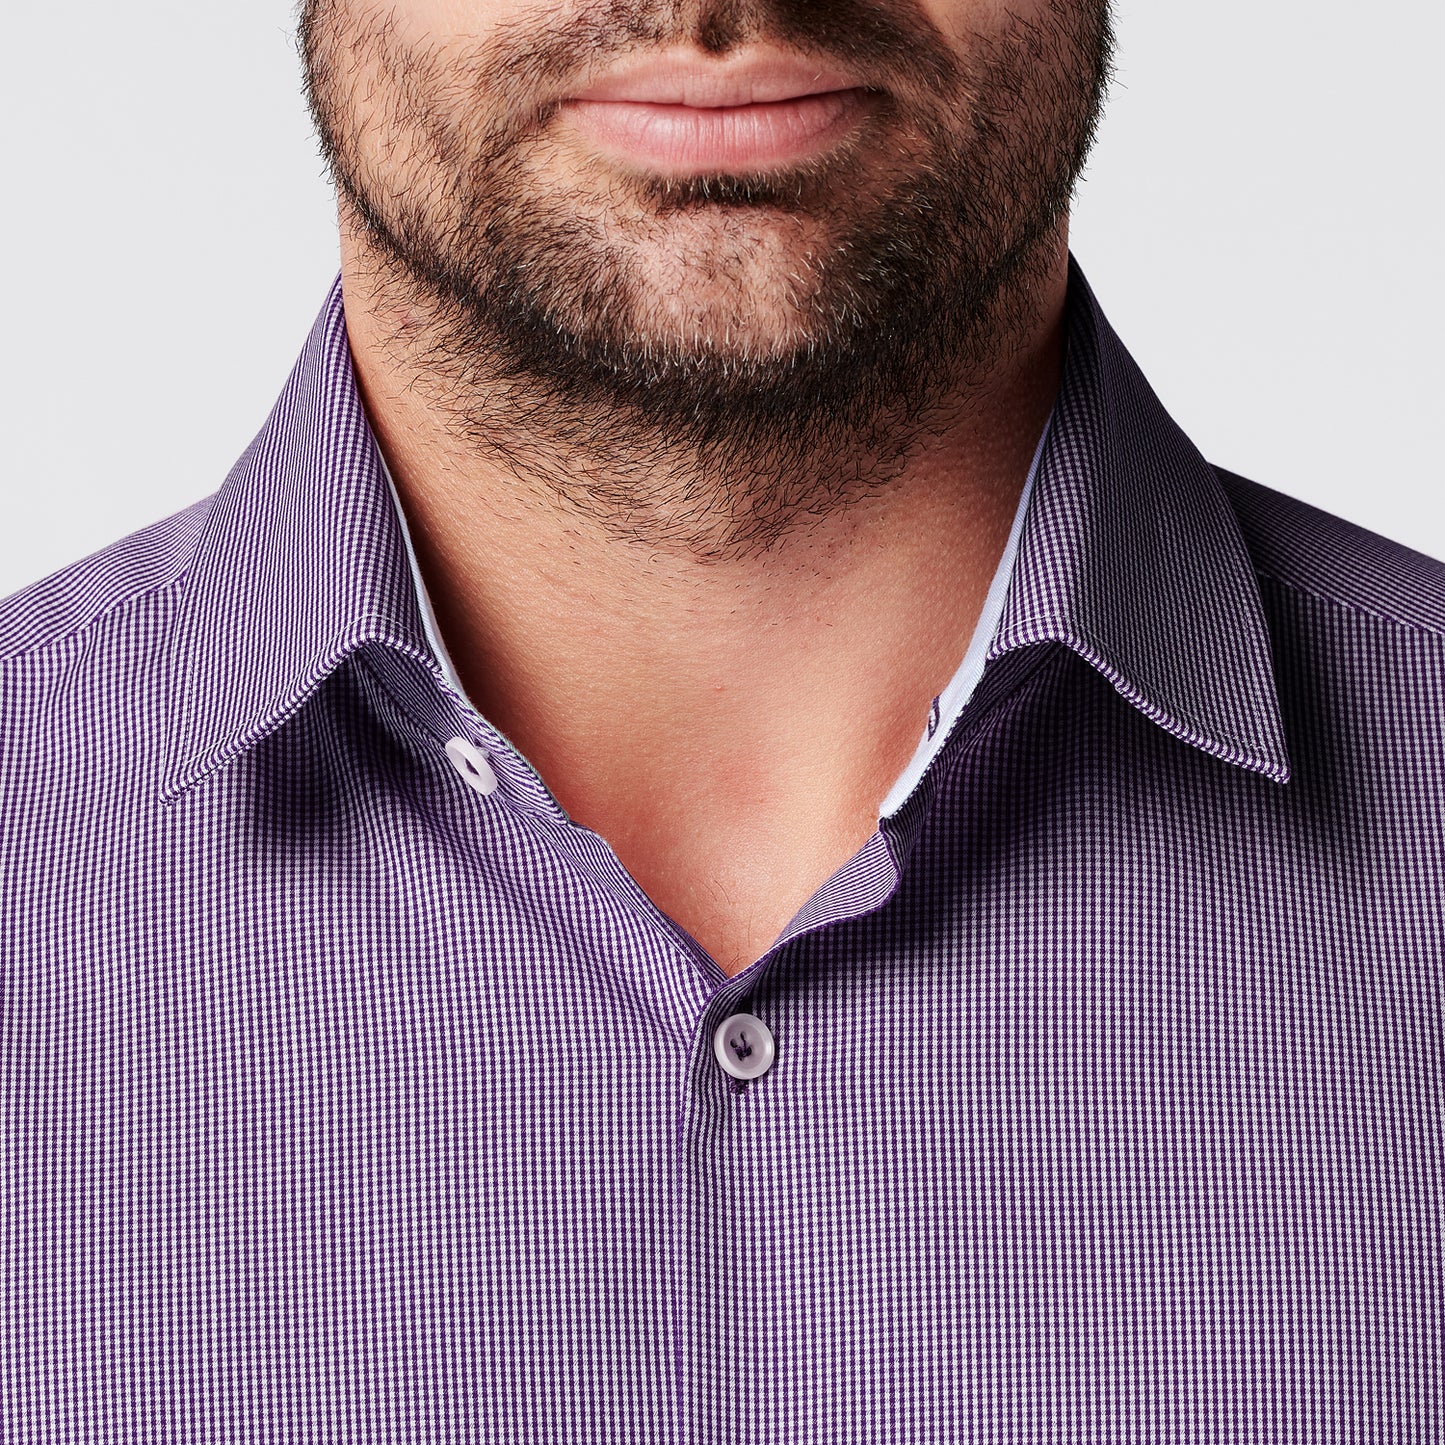 Shirt - Slim Fit - Checkered Purple